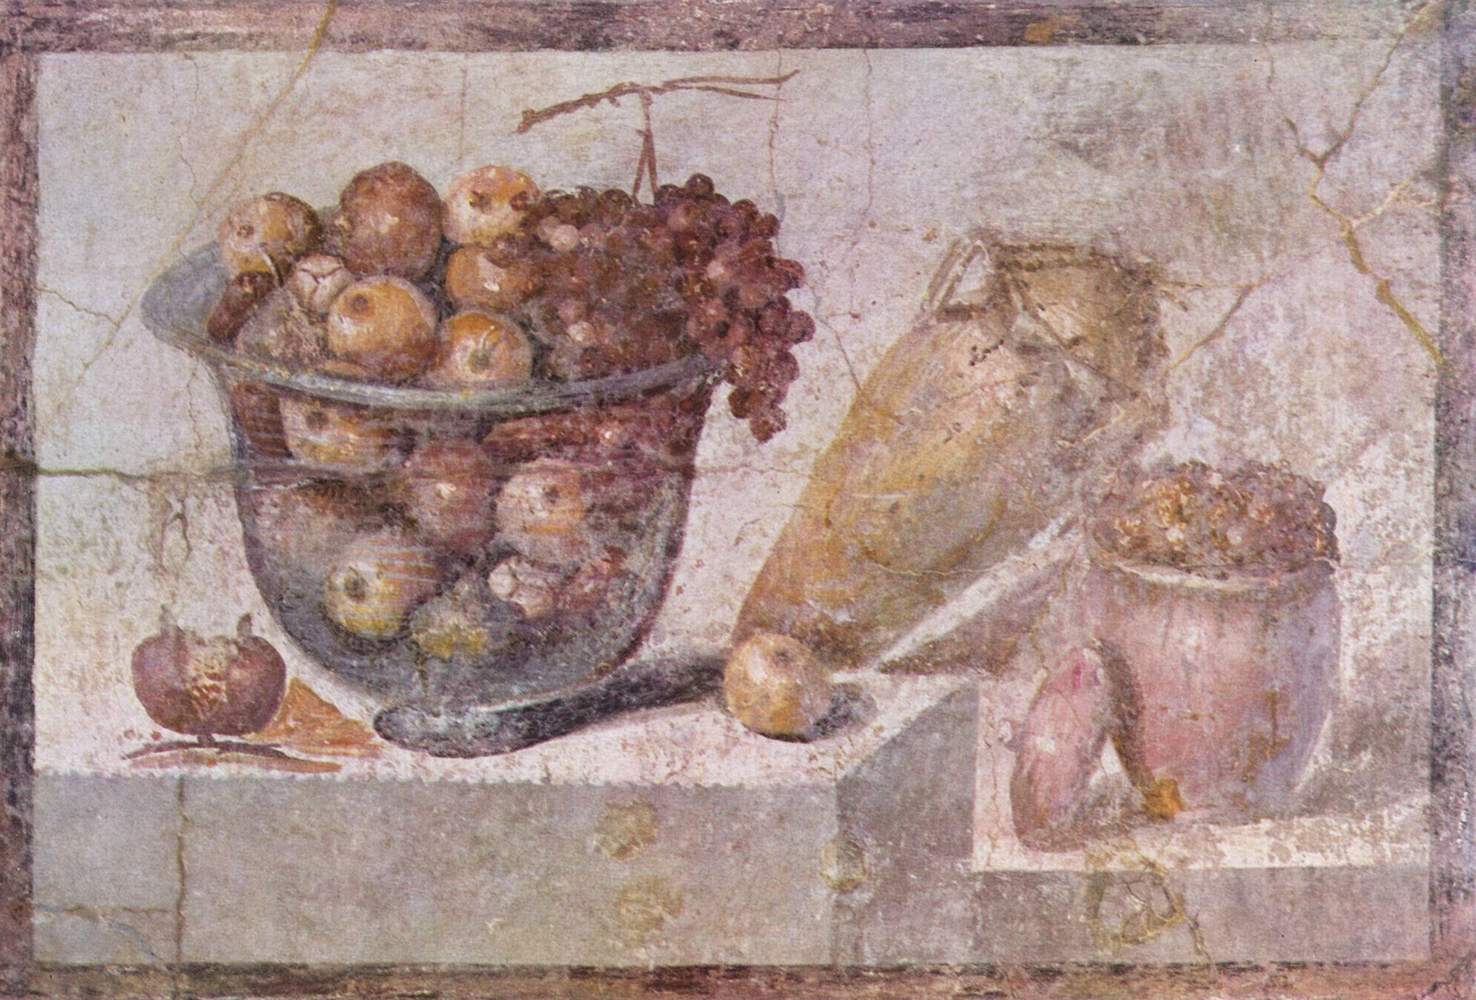 Ancient Roman Food